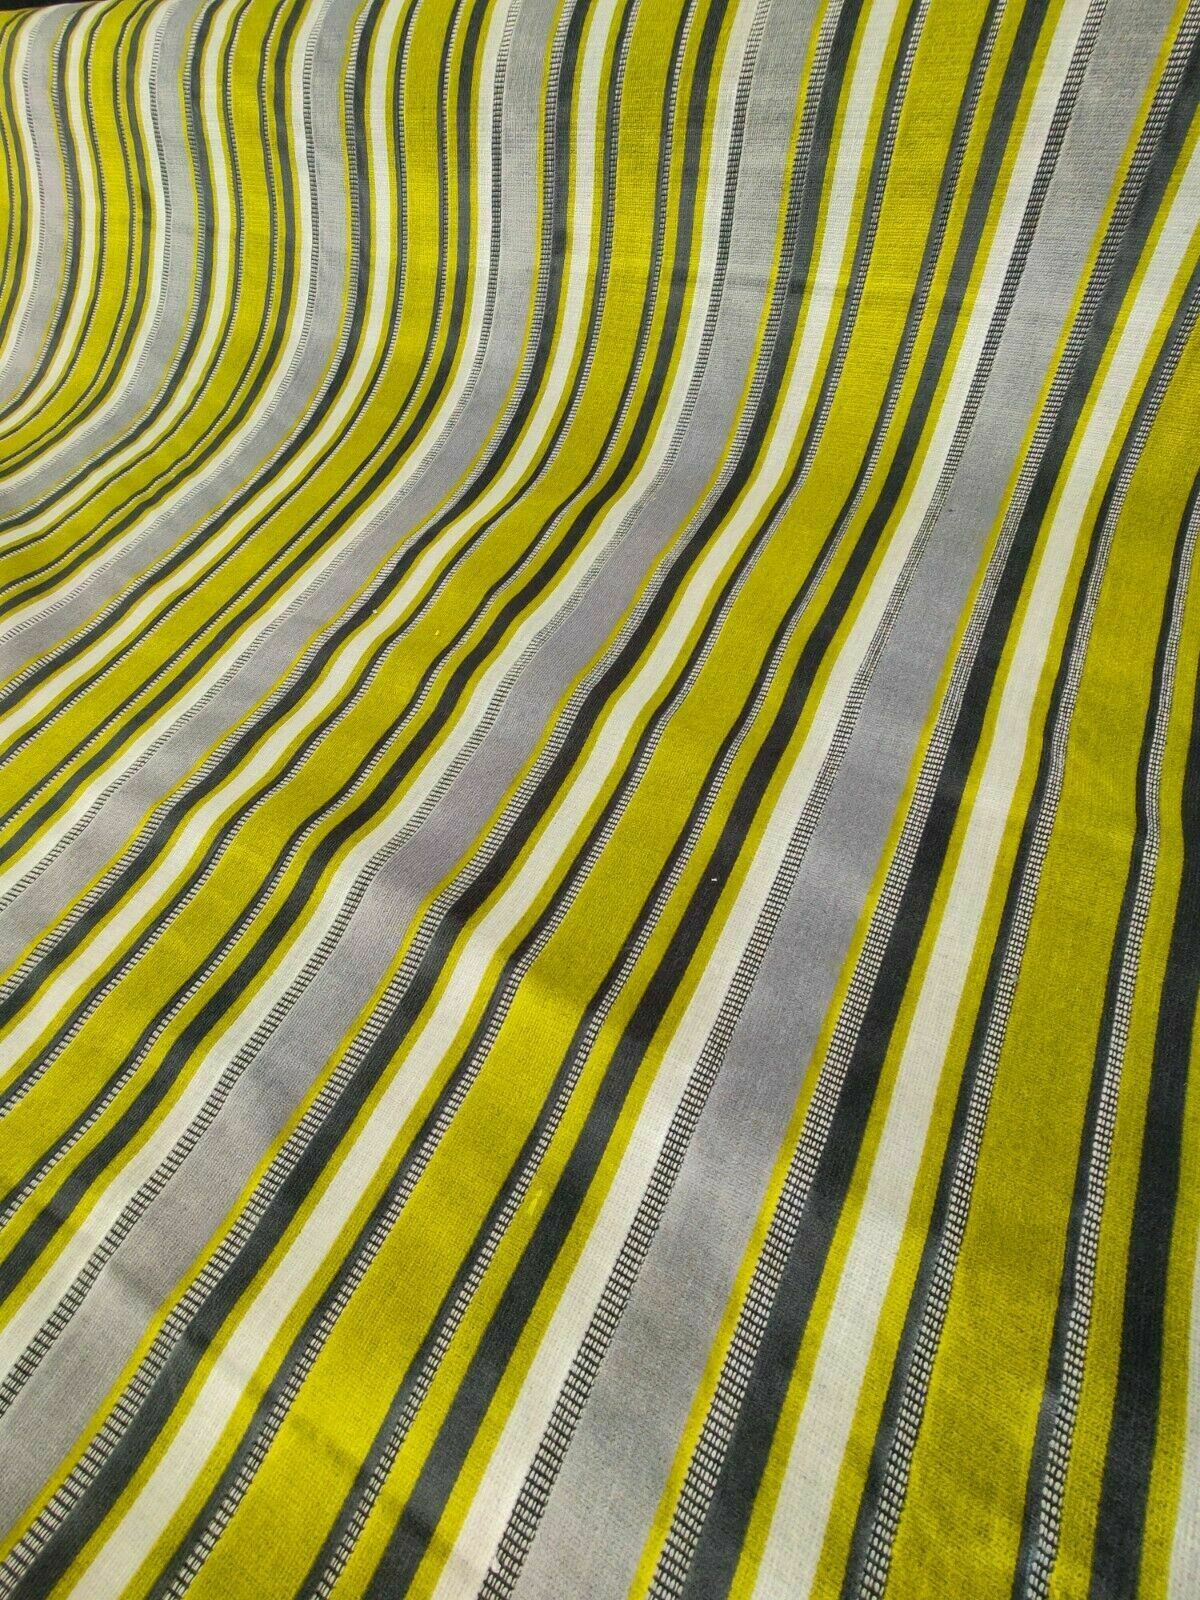 Panaz Ravello Citrus/Charcoal Upholstery Fabric Per Metre